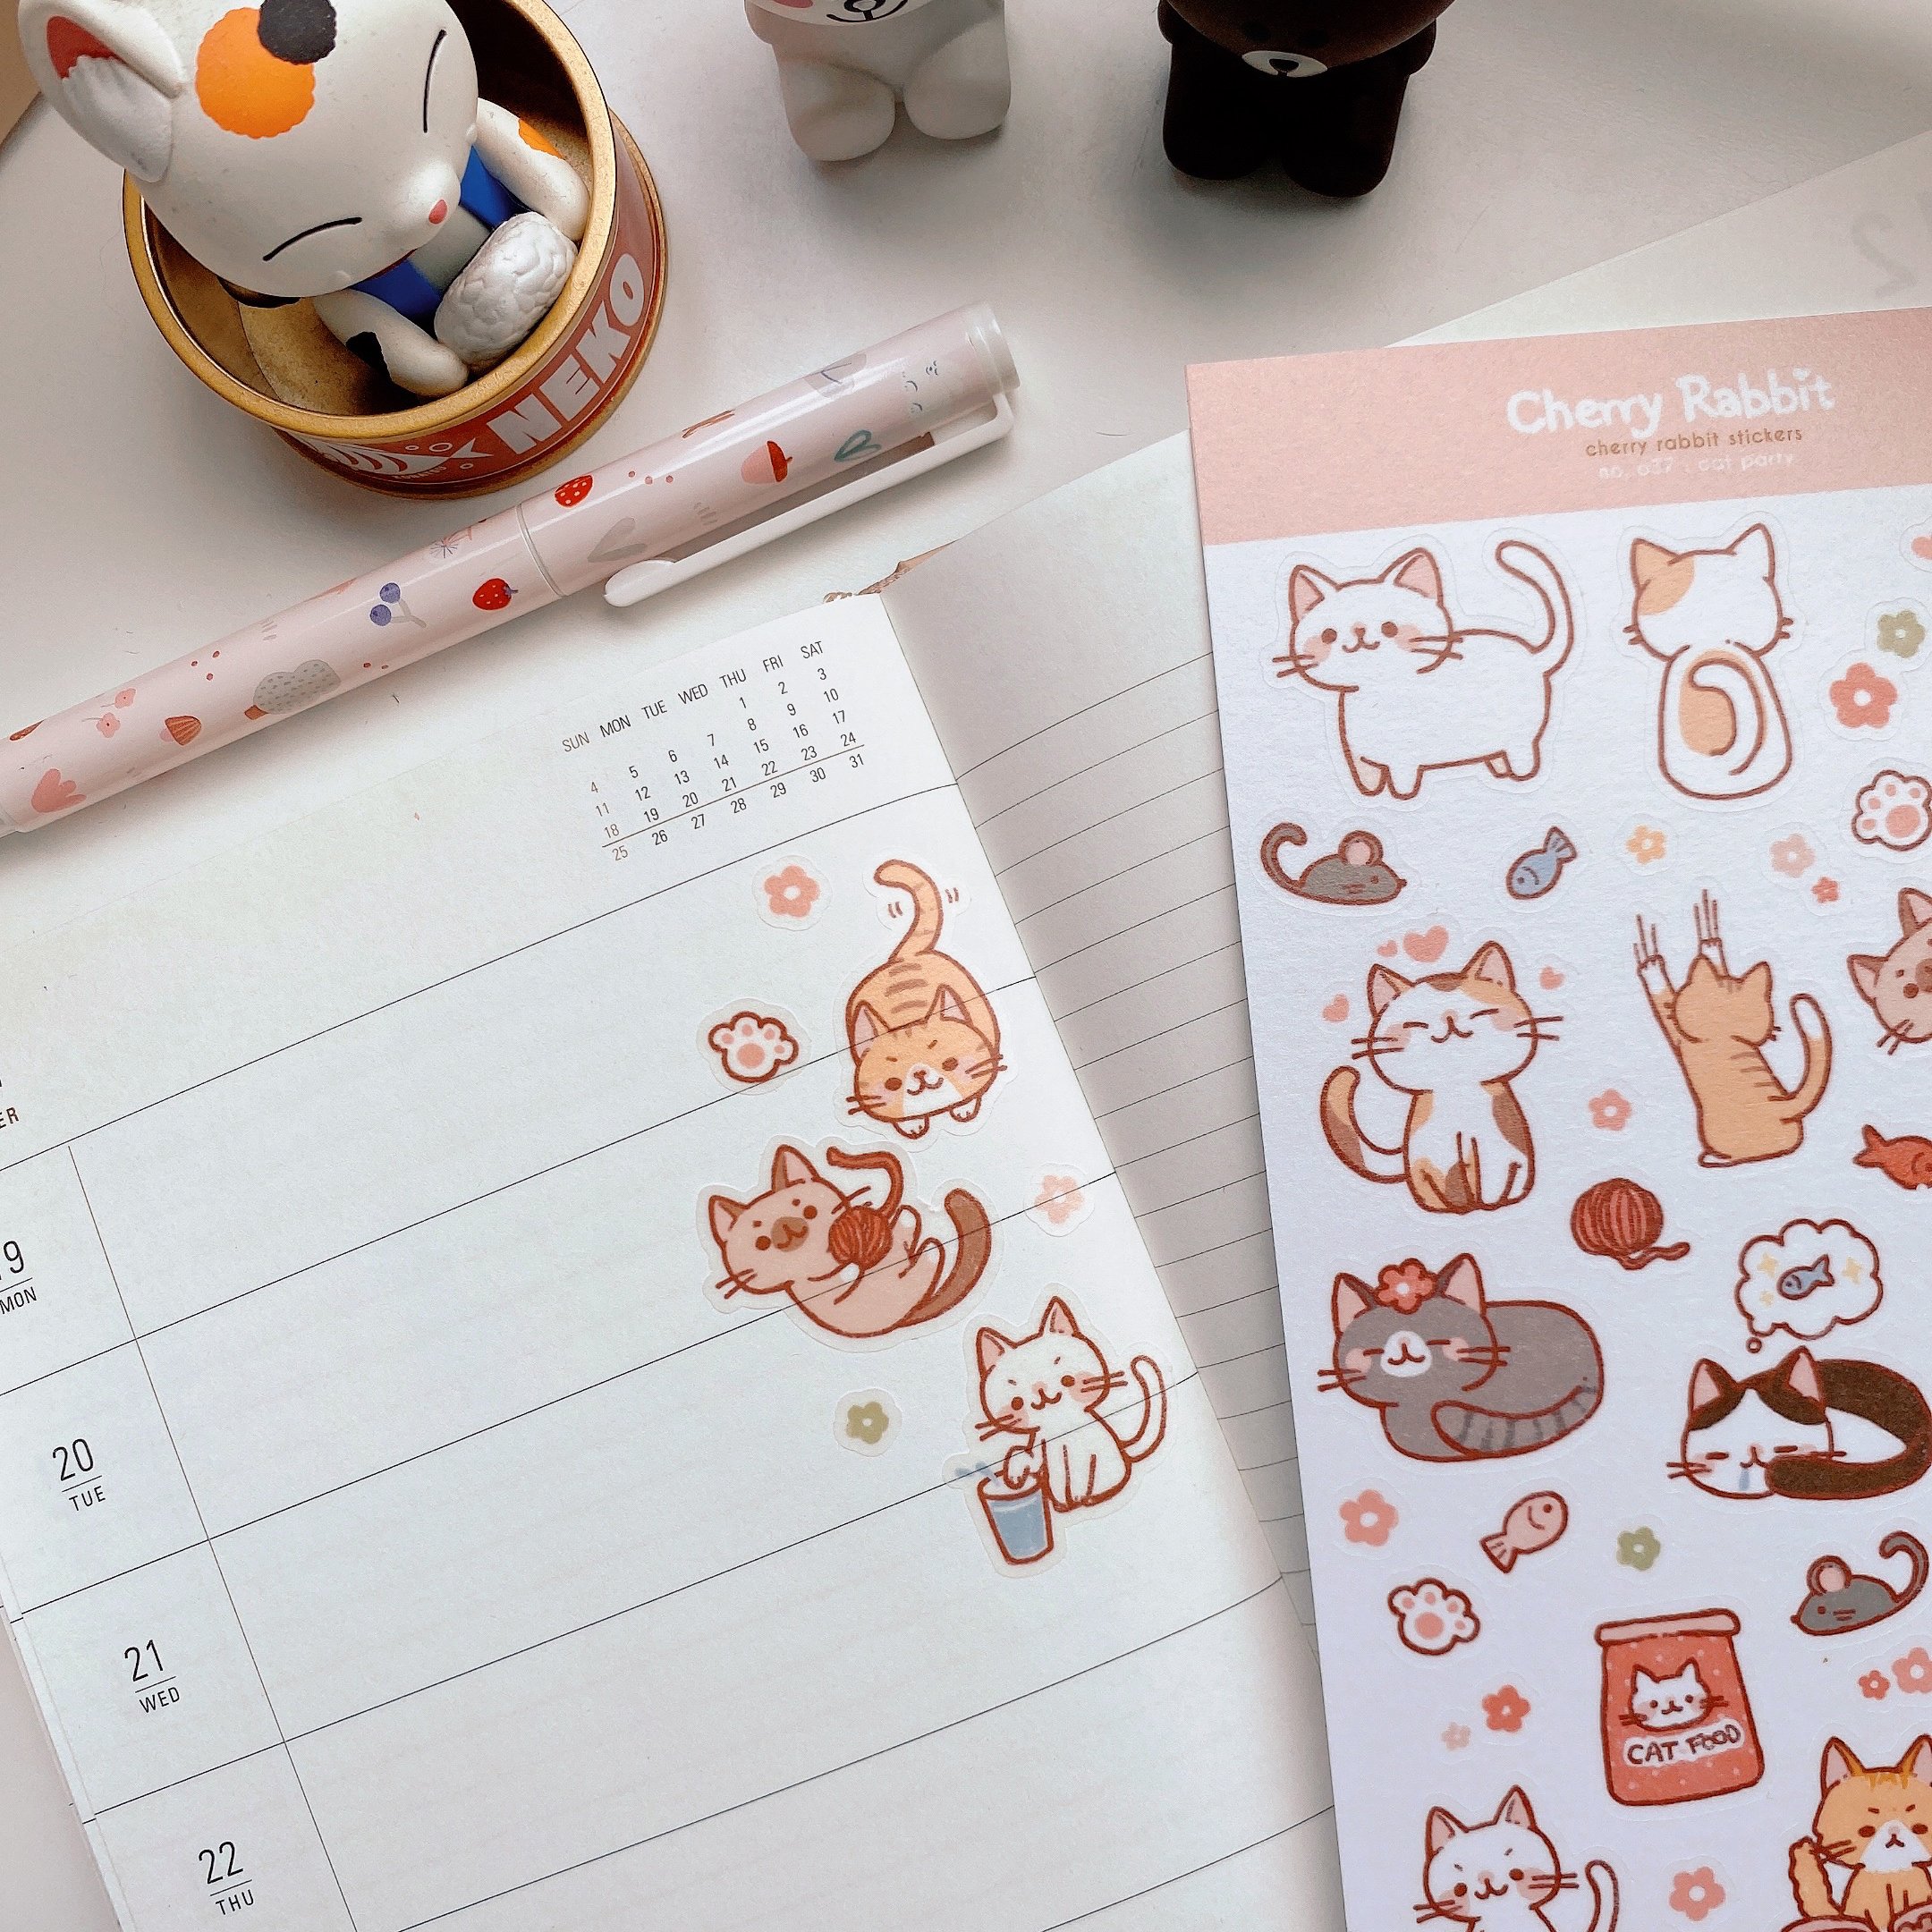 Cat Party: Sticker Sheet — Cherry Rabbit